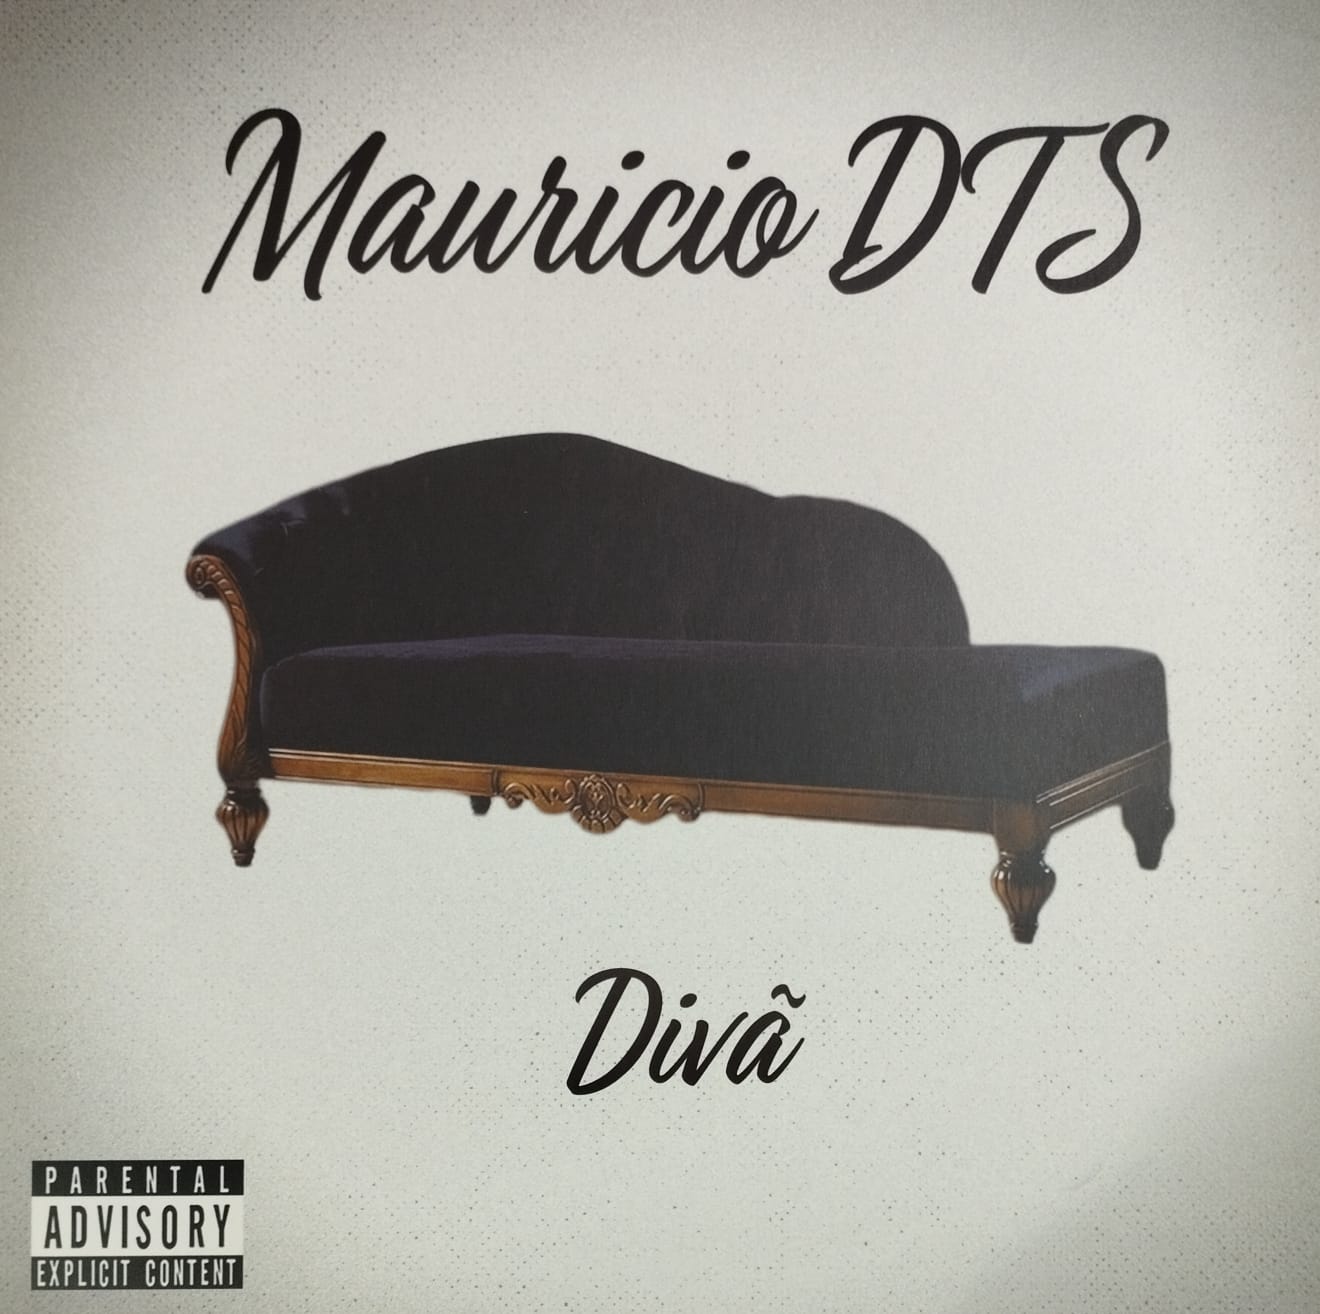 Maurício DTS - Divã (Álbum)